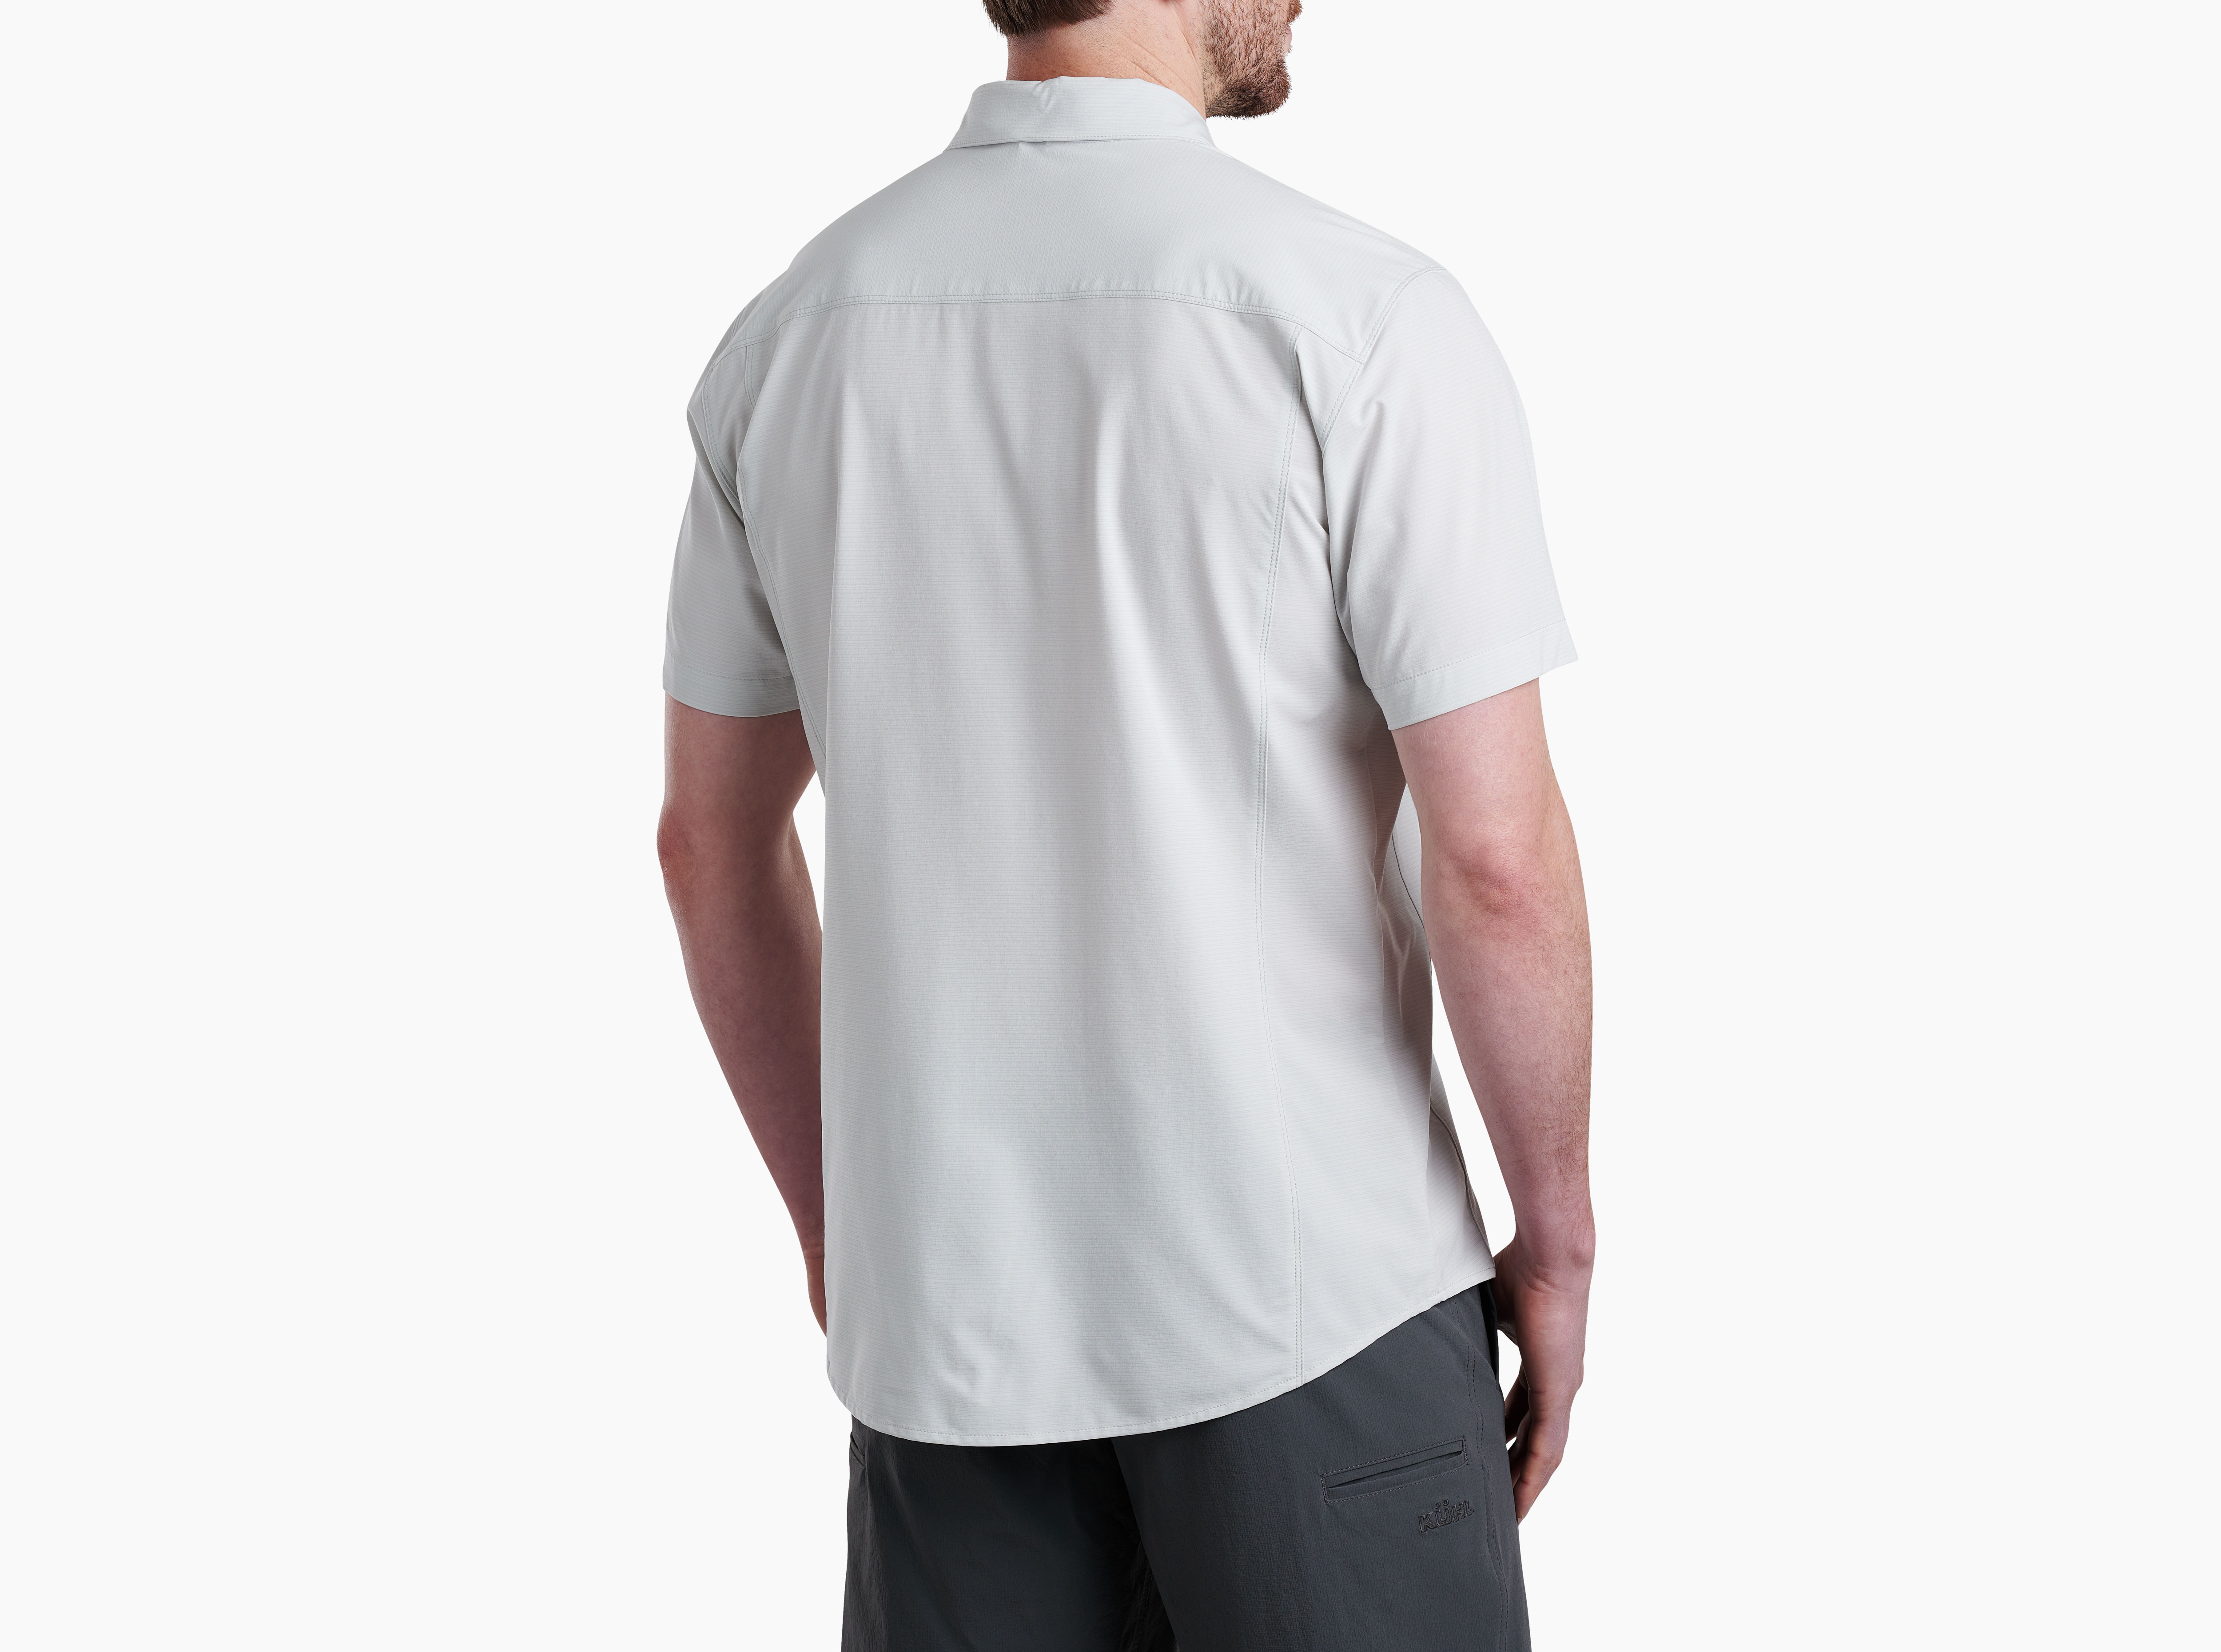 Optimizr™ in Men's Short Sleeve